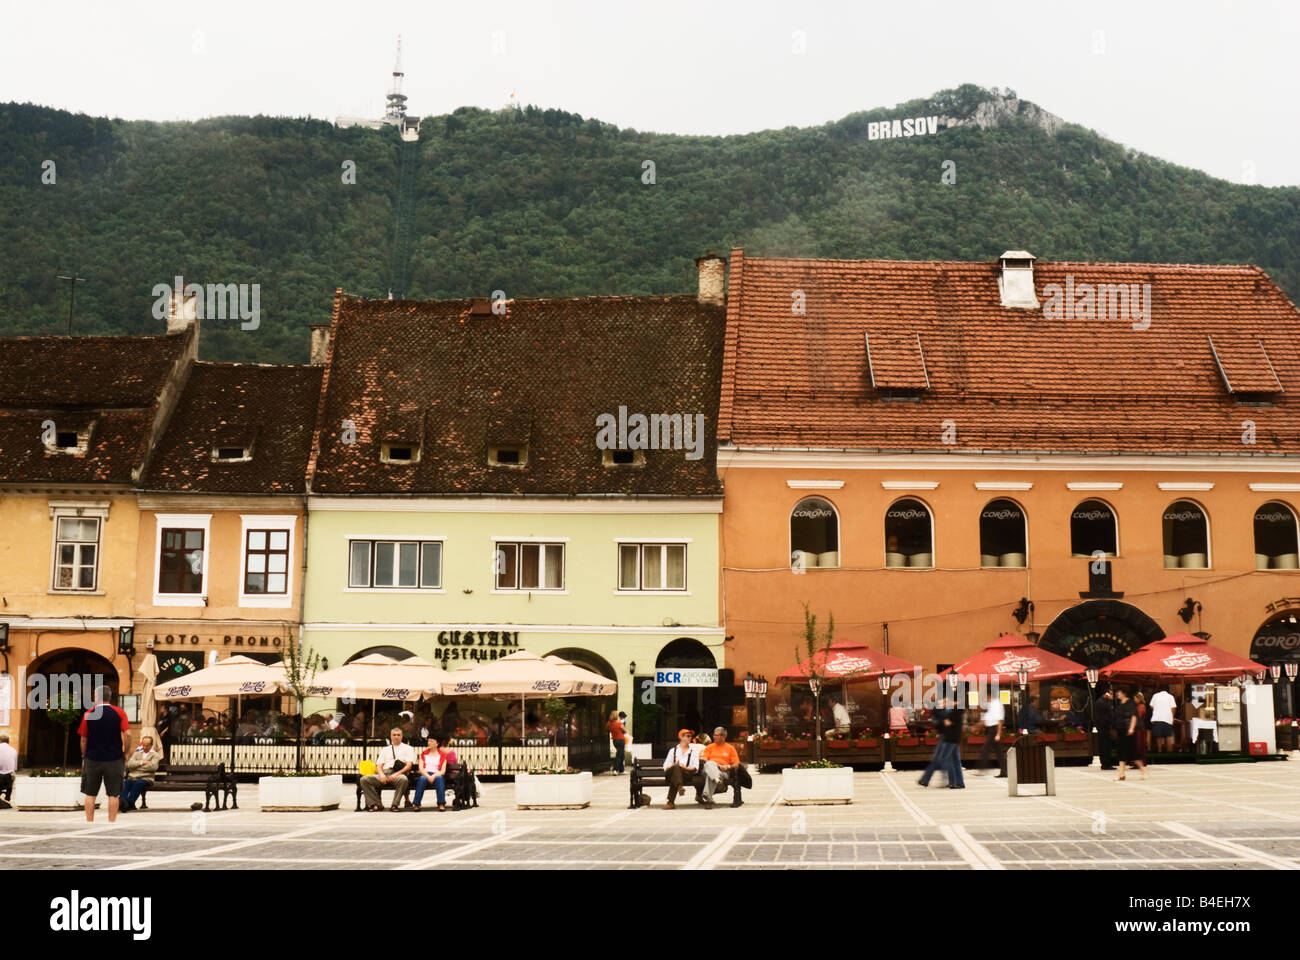 Old Town Square, Brasov, Romania. Stock Photo